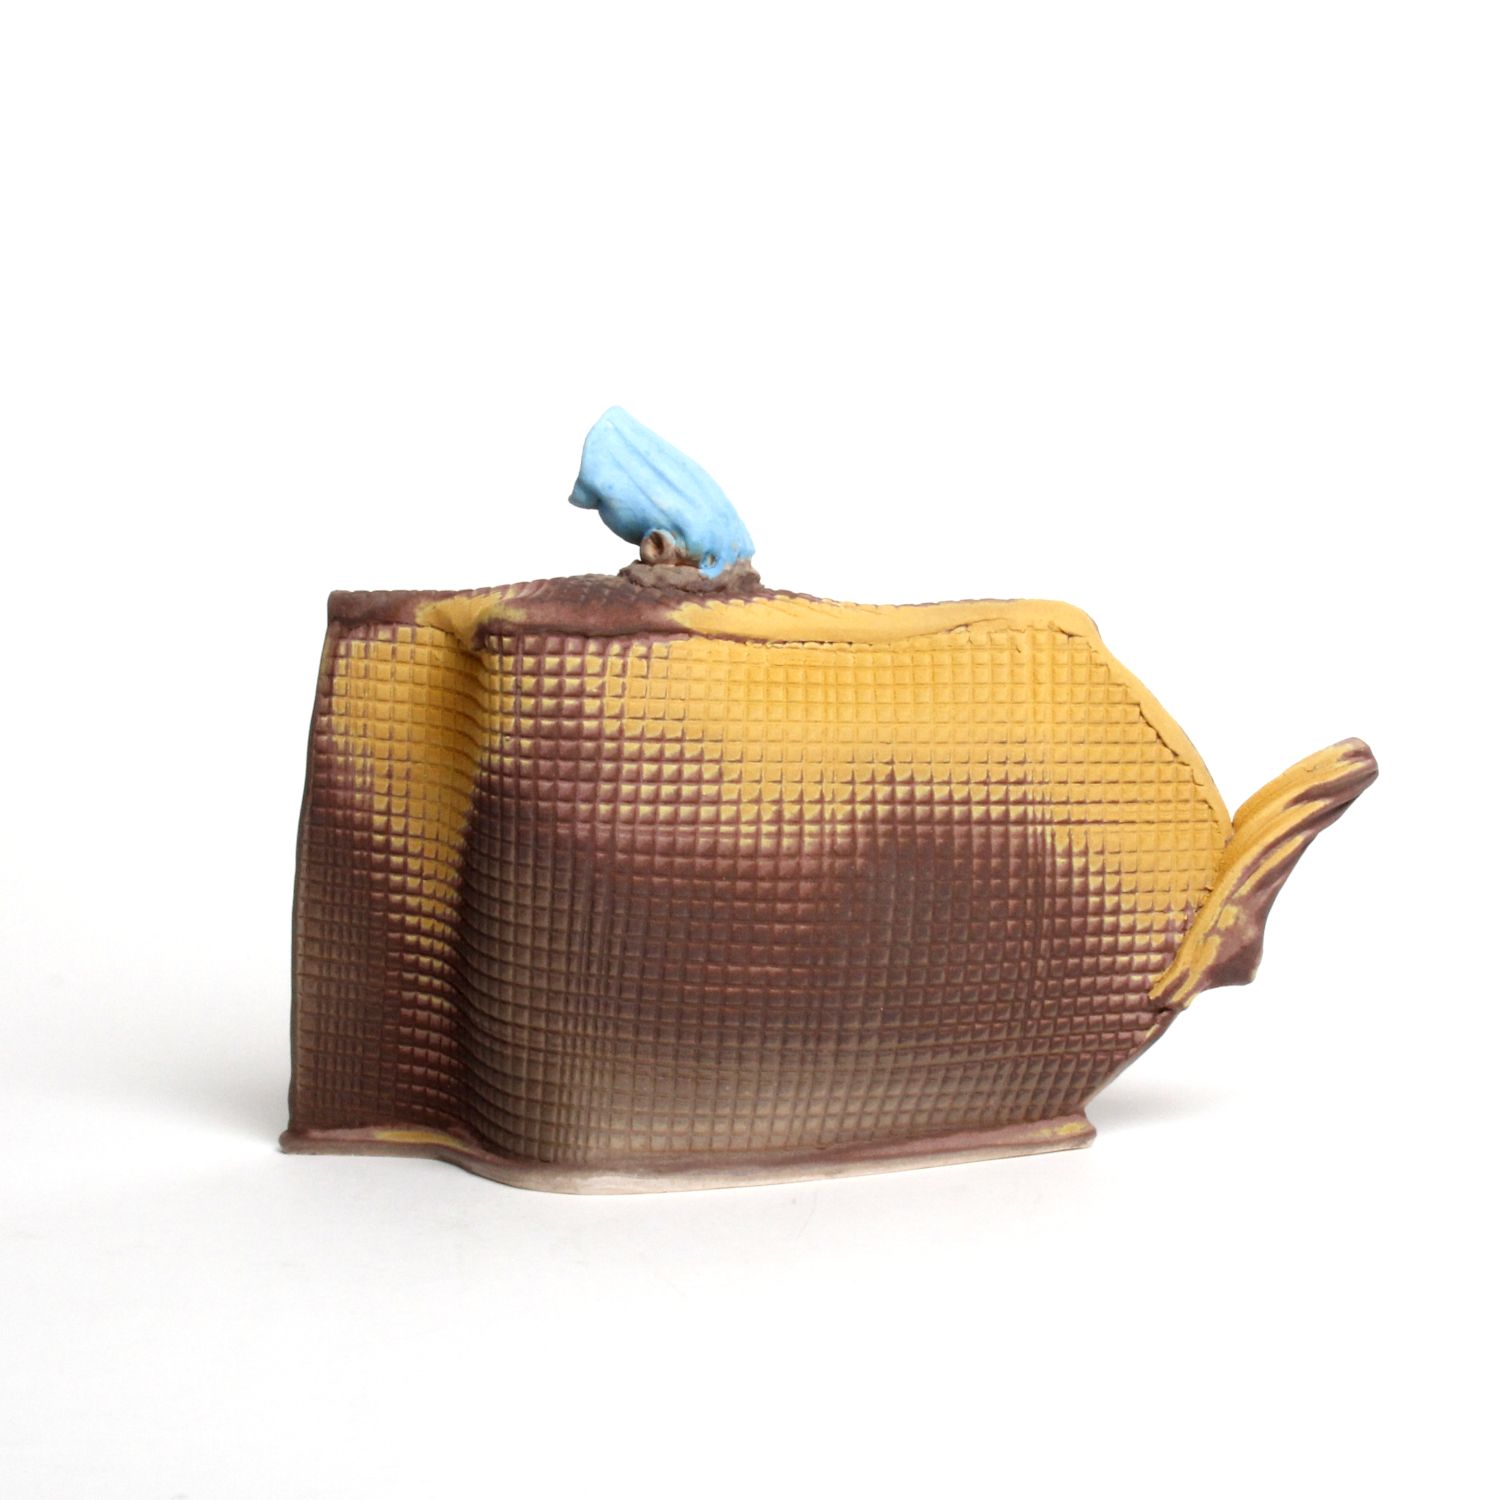 Shu-Chen Cheng: Yellow Flat Teapot Sculpture Product Image 2 of 2